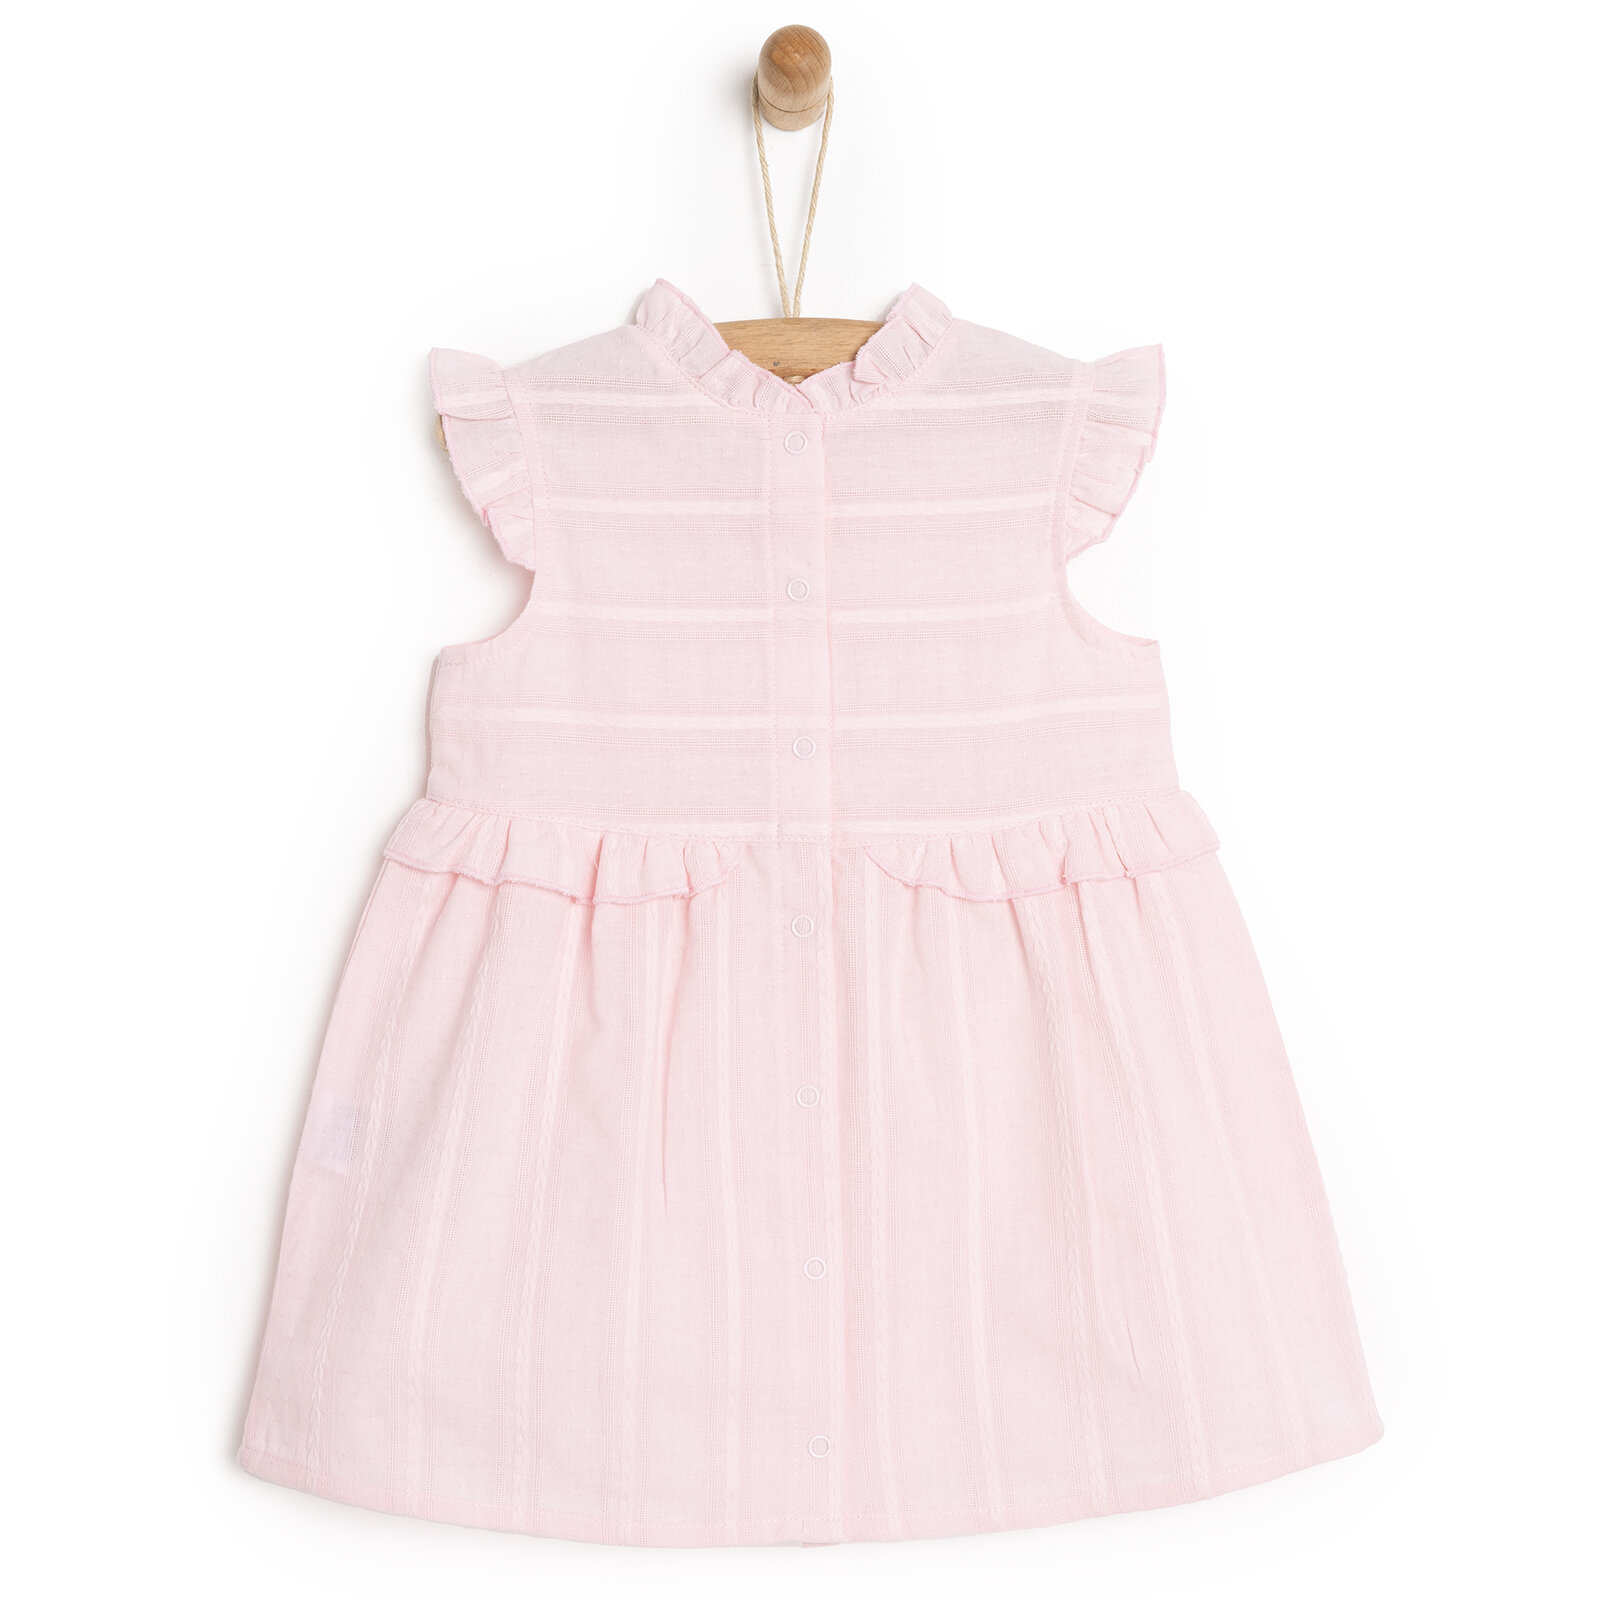 Pinky Elbise Kız Bebek